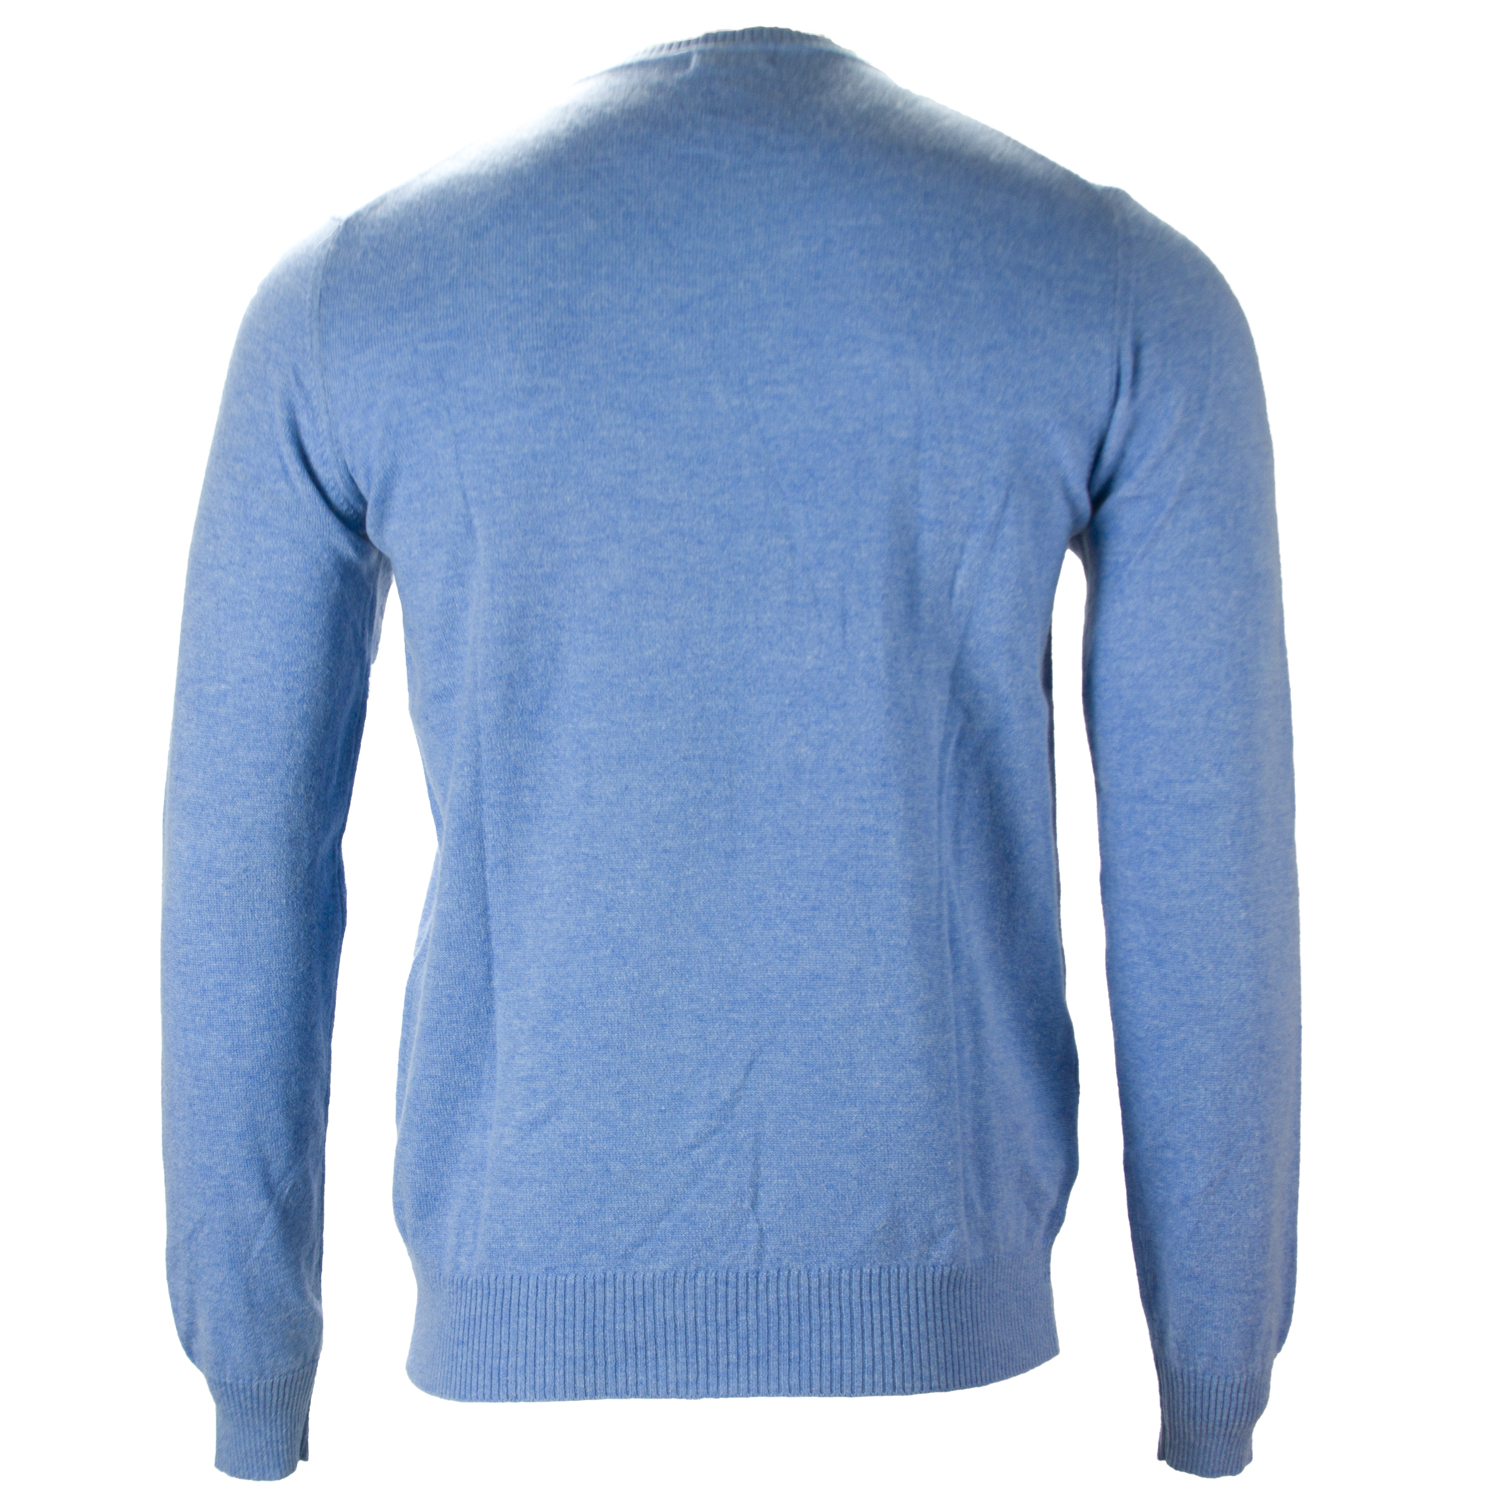 J. LINDEBERG Men's Blue Melange C-Neck Kashmerino Sweater $325 NWT | eBay